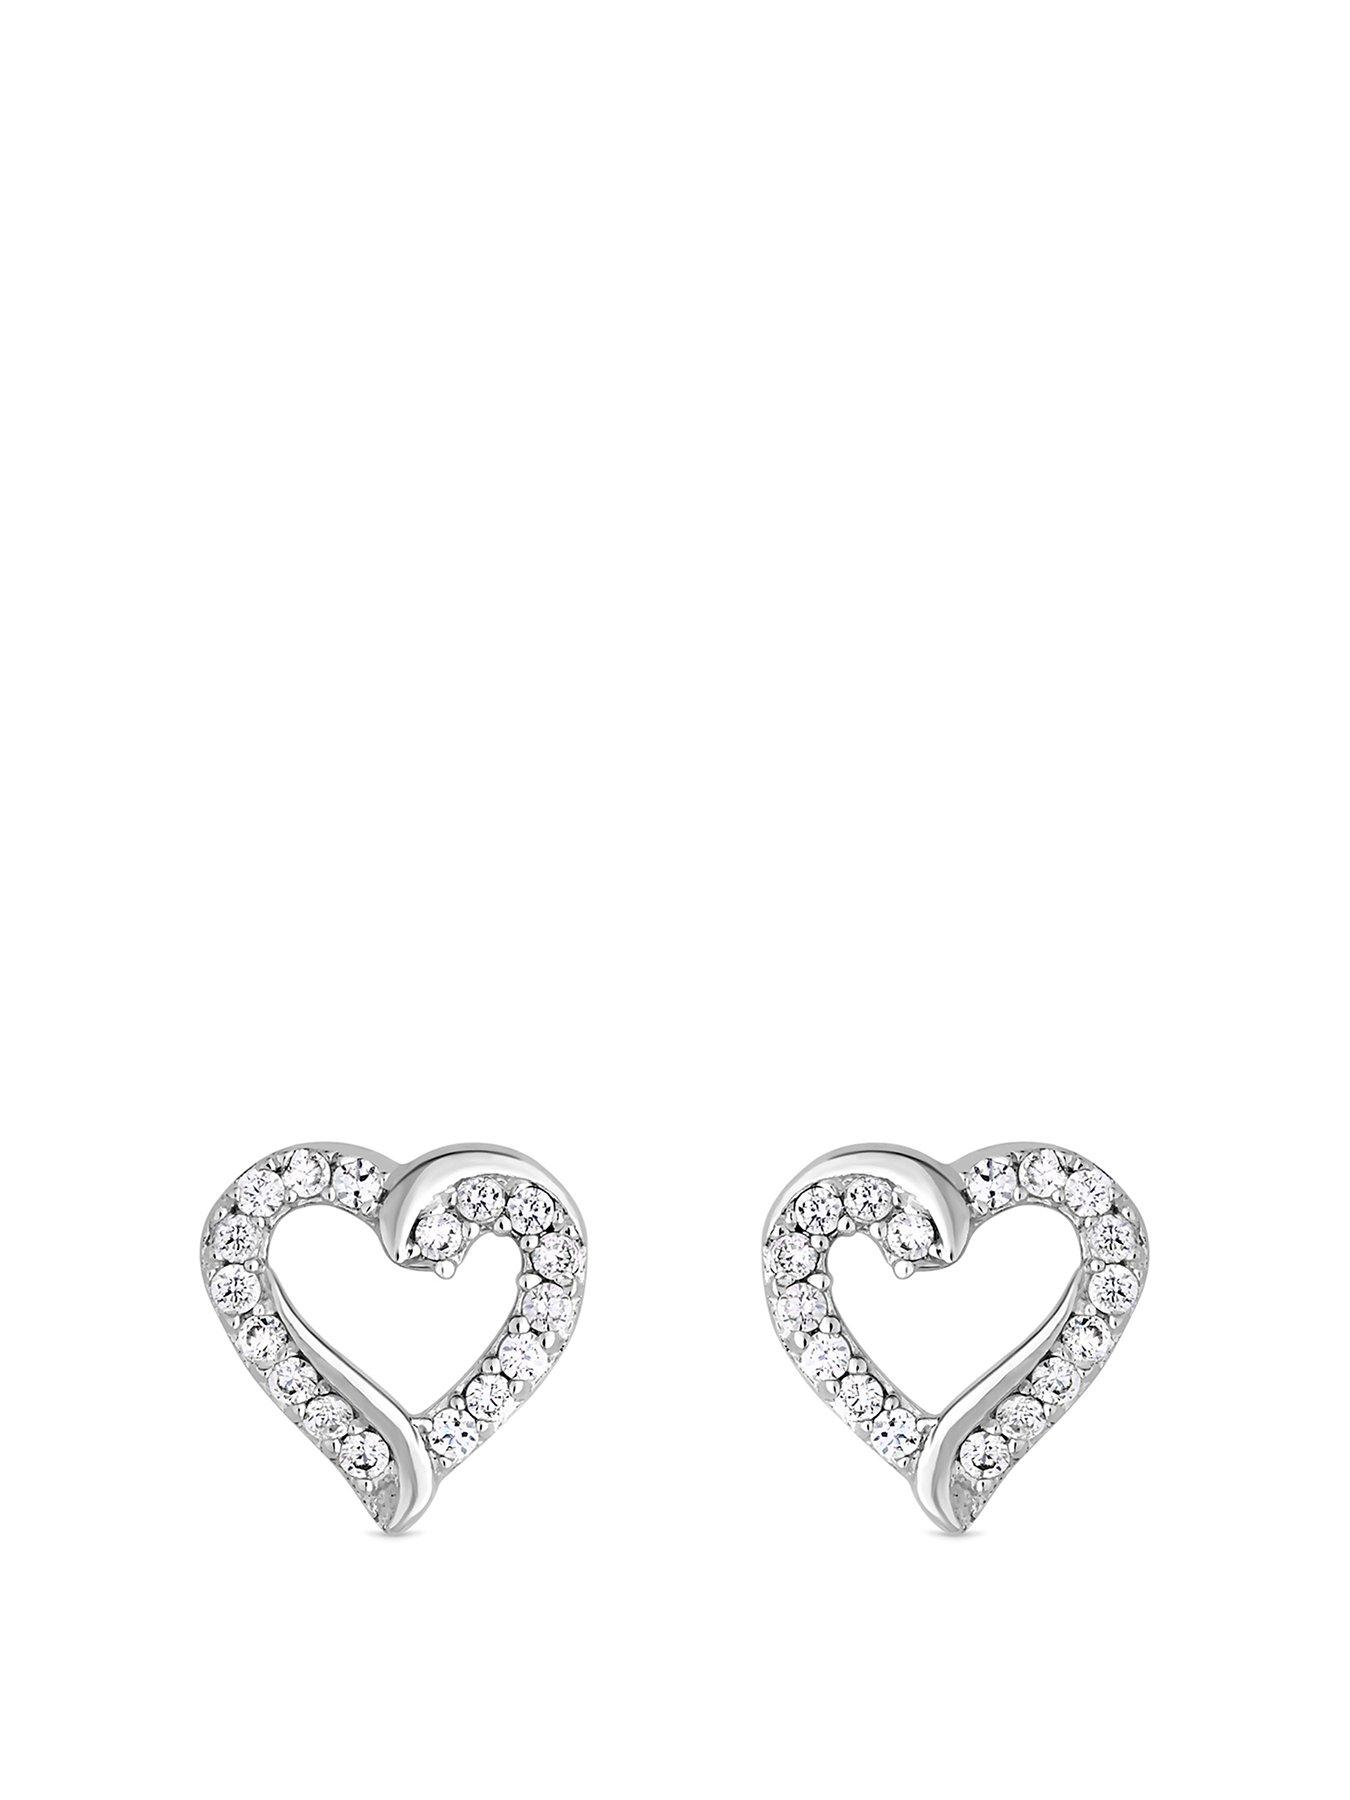 Luxury Round Monn Diamond Earrings 1 Pair Shinning Diamond Earrings for Women Personality Fairy Sparkle Hoop Earrings 